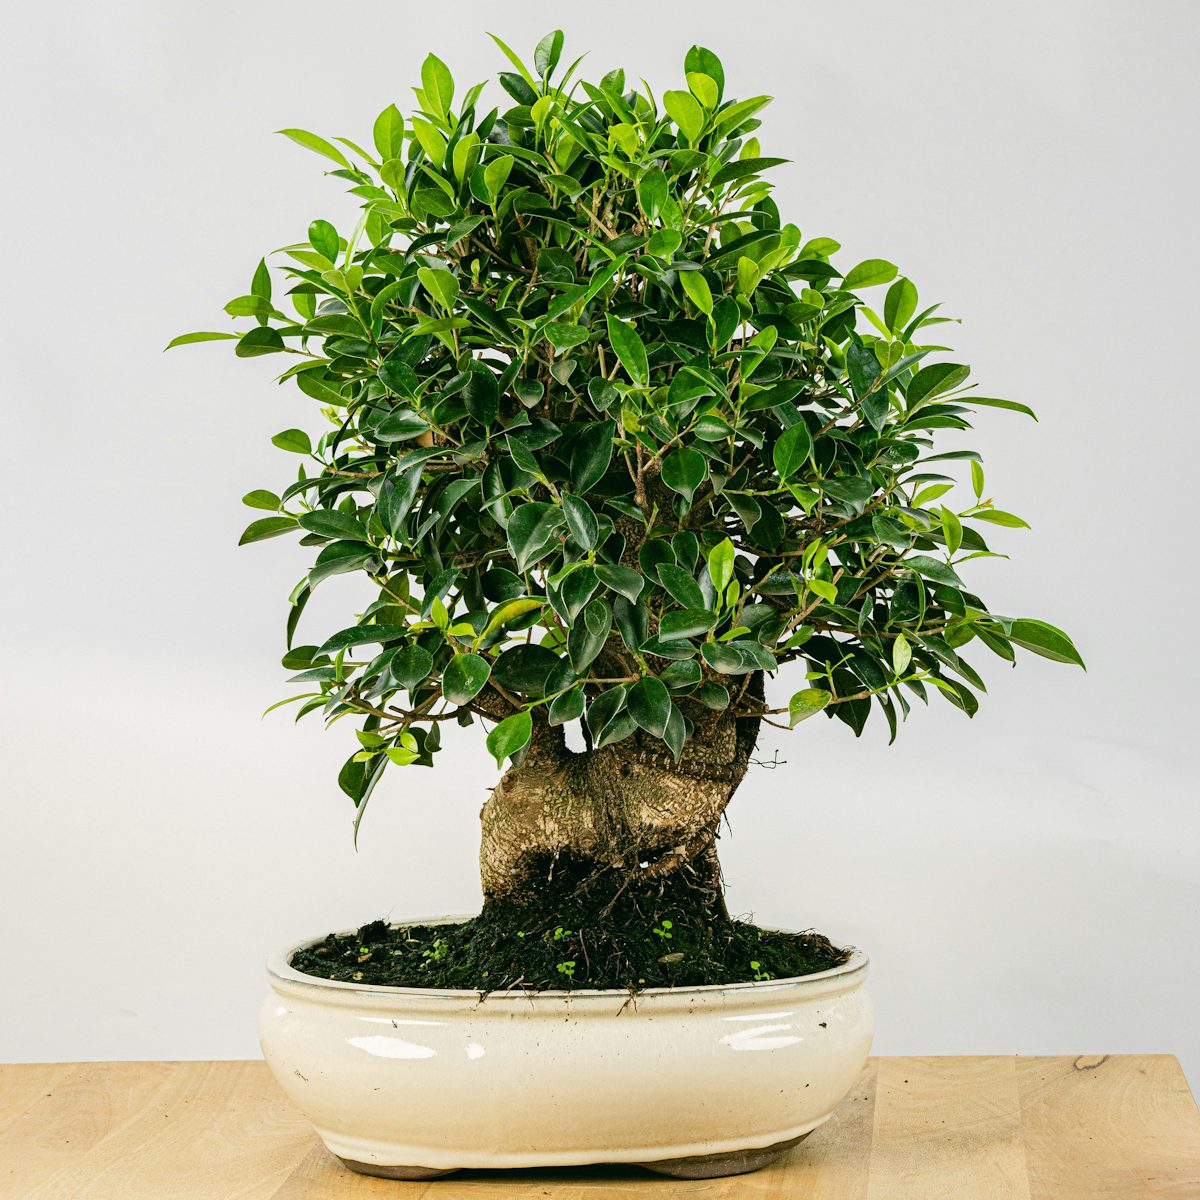 Bonsai 21 ans Ficus retusa